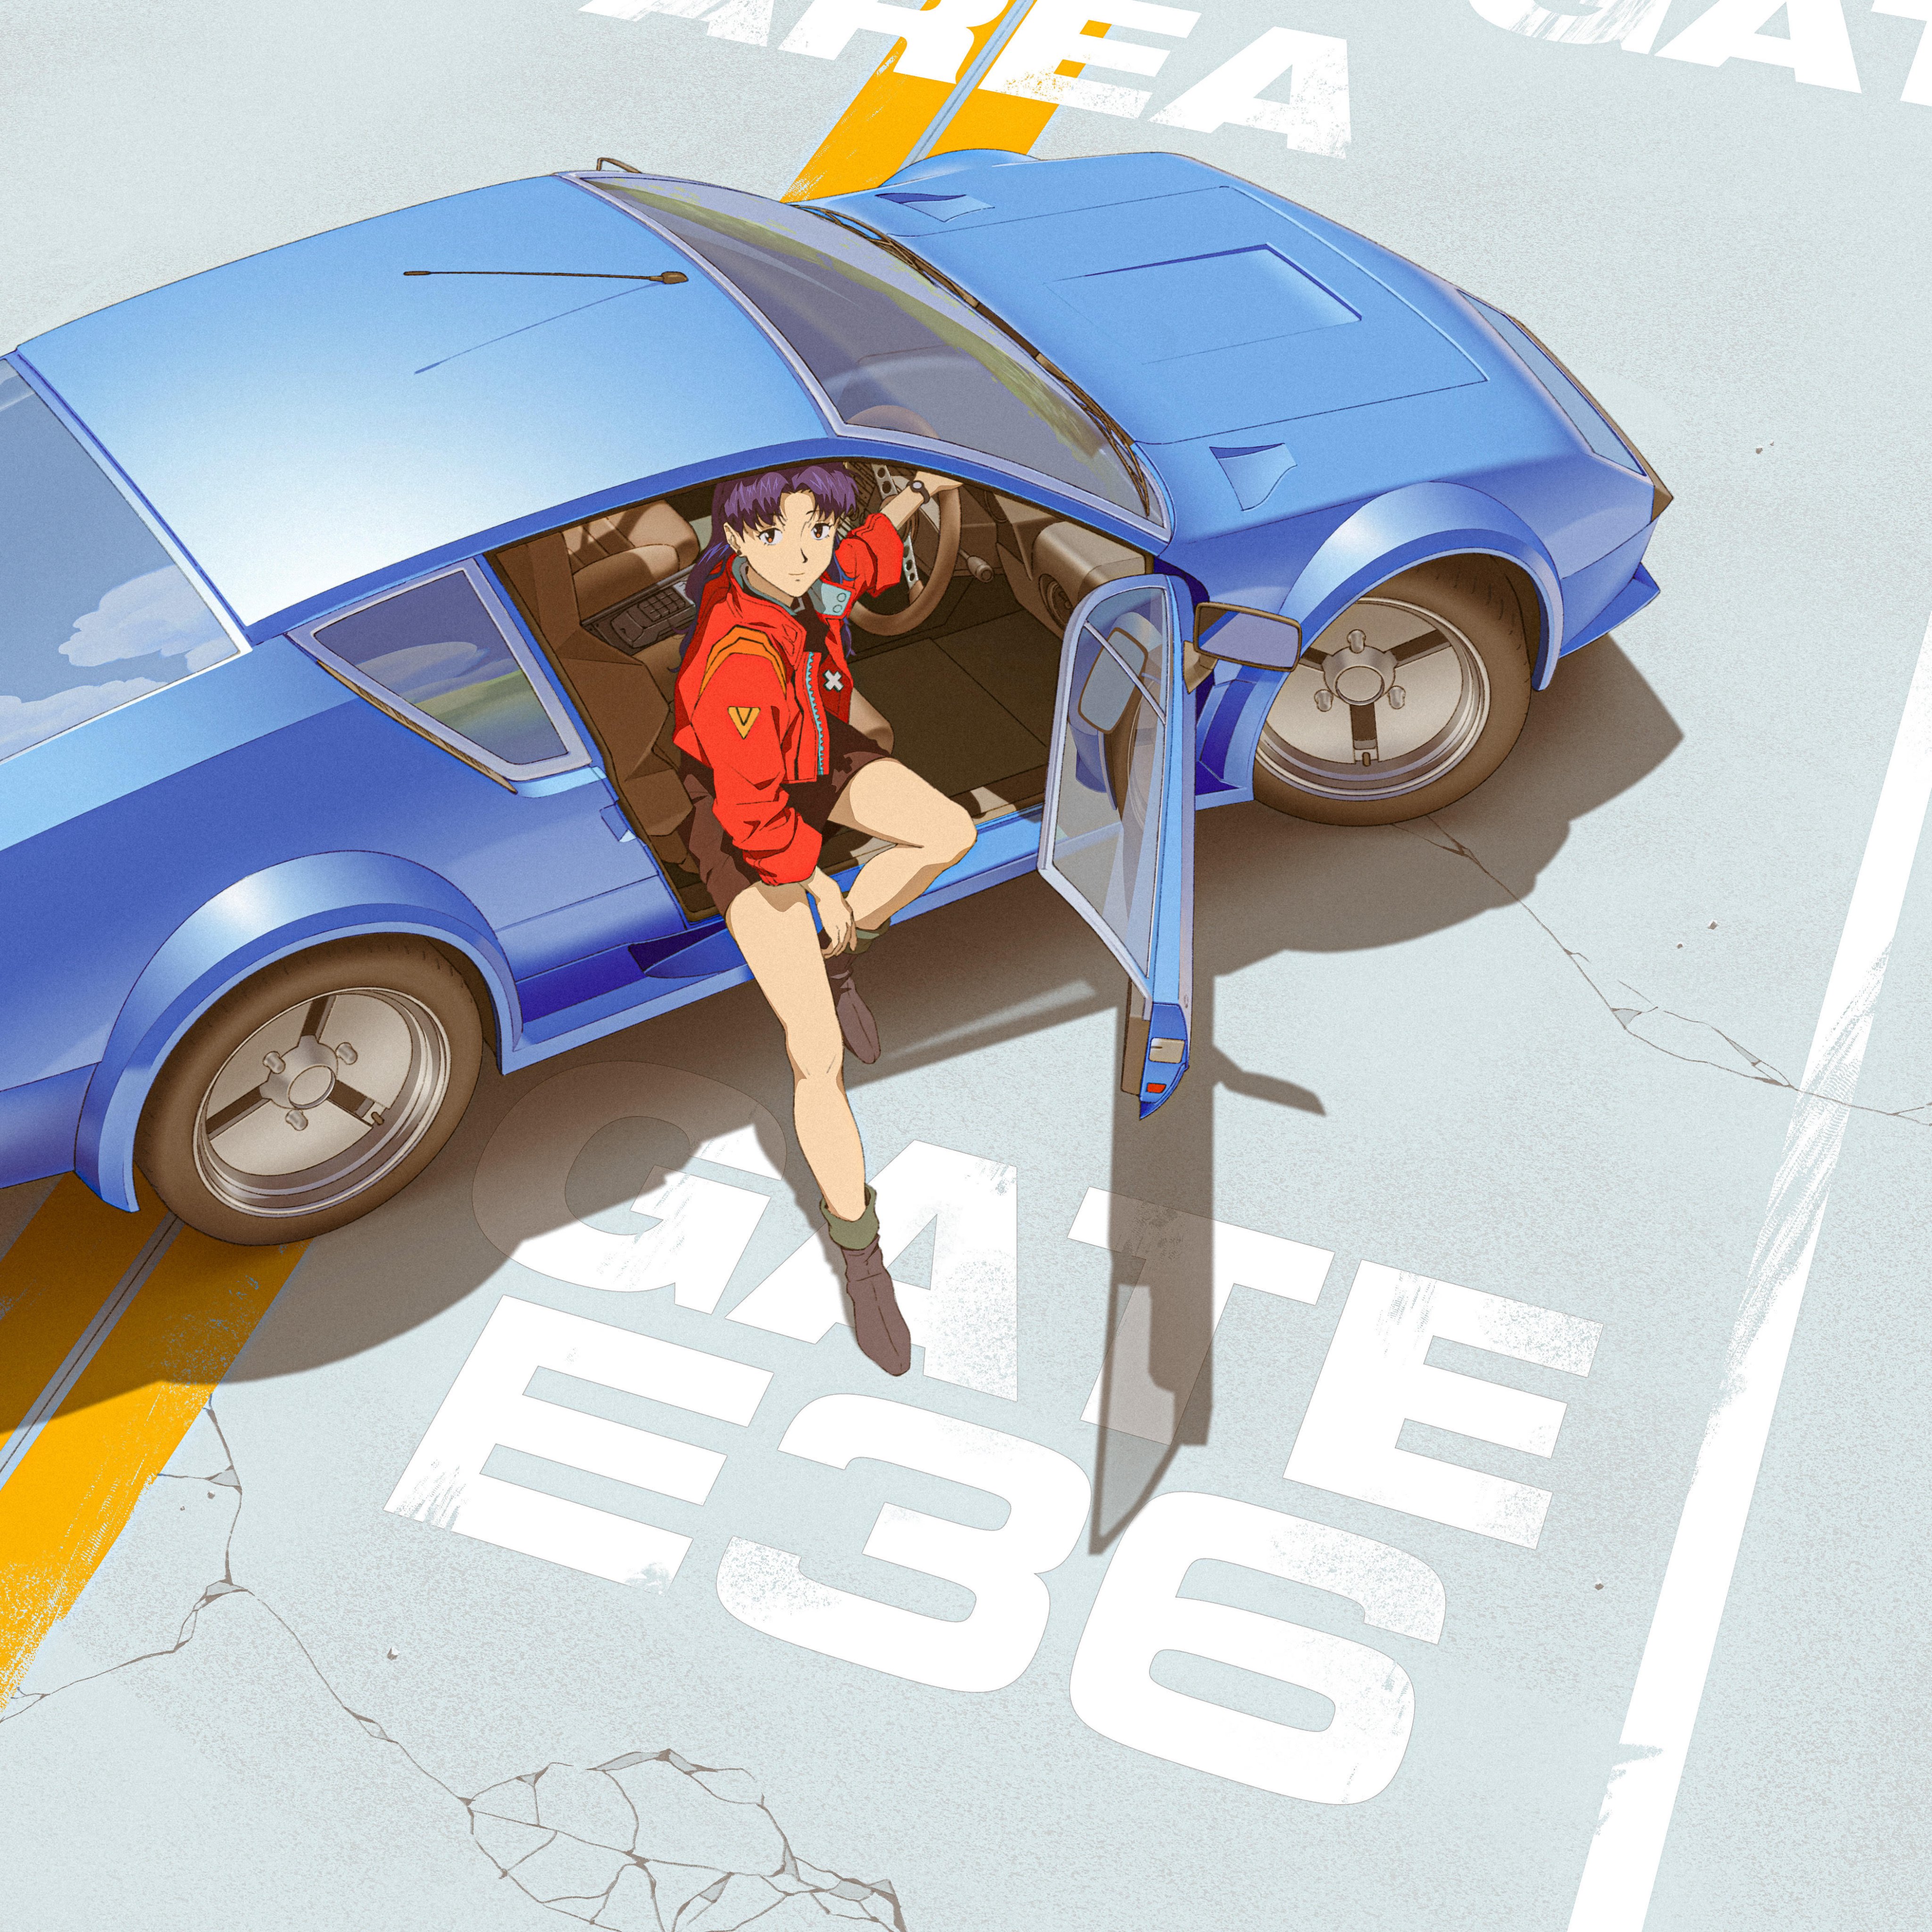 Anime 4096x4096 bysau digital art artwork illustration Katsuragi Misato Neon Genesis Evangelion anime anime girls car vehicle blue cars reflection road Alpine A310 looking at viewer high angle women with cars legs women numbers asphalt